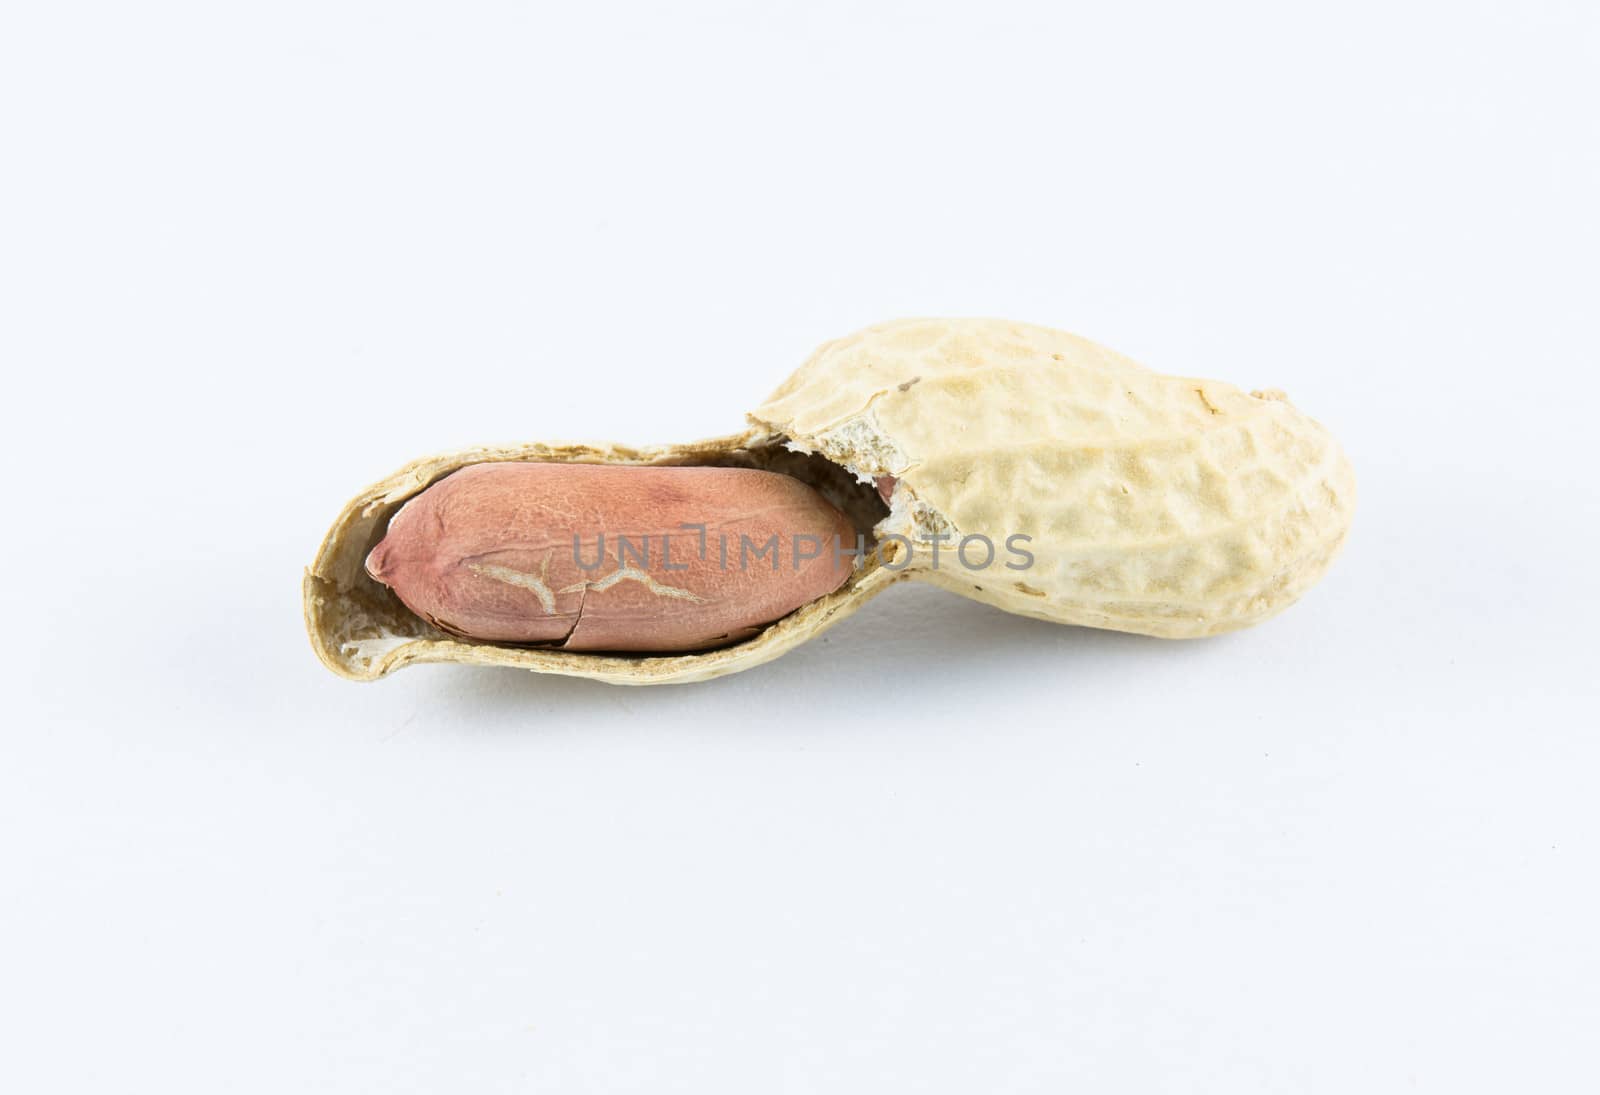 Baked Thai peanut or ground nut  by Sorapop